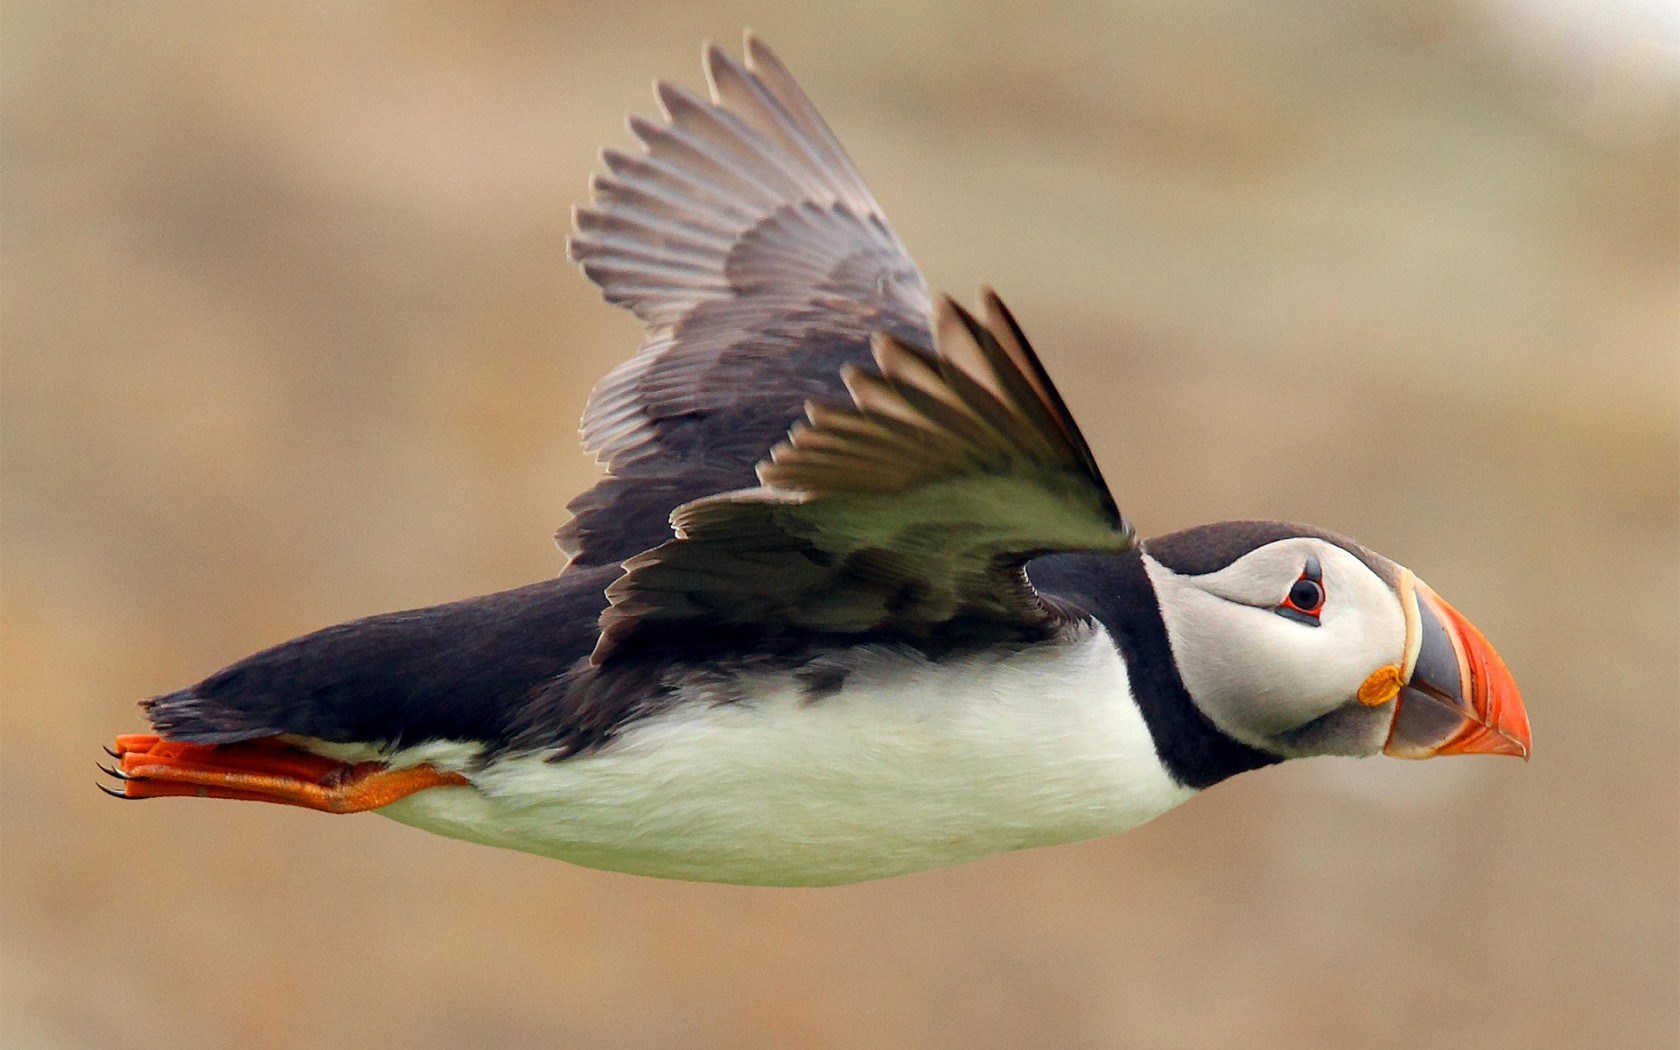 puffin seabird flying